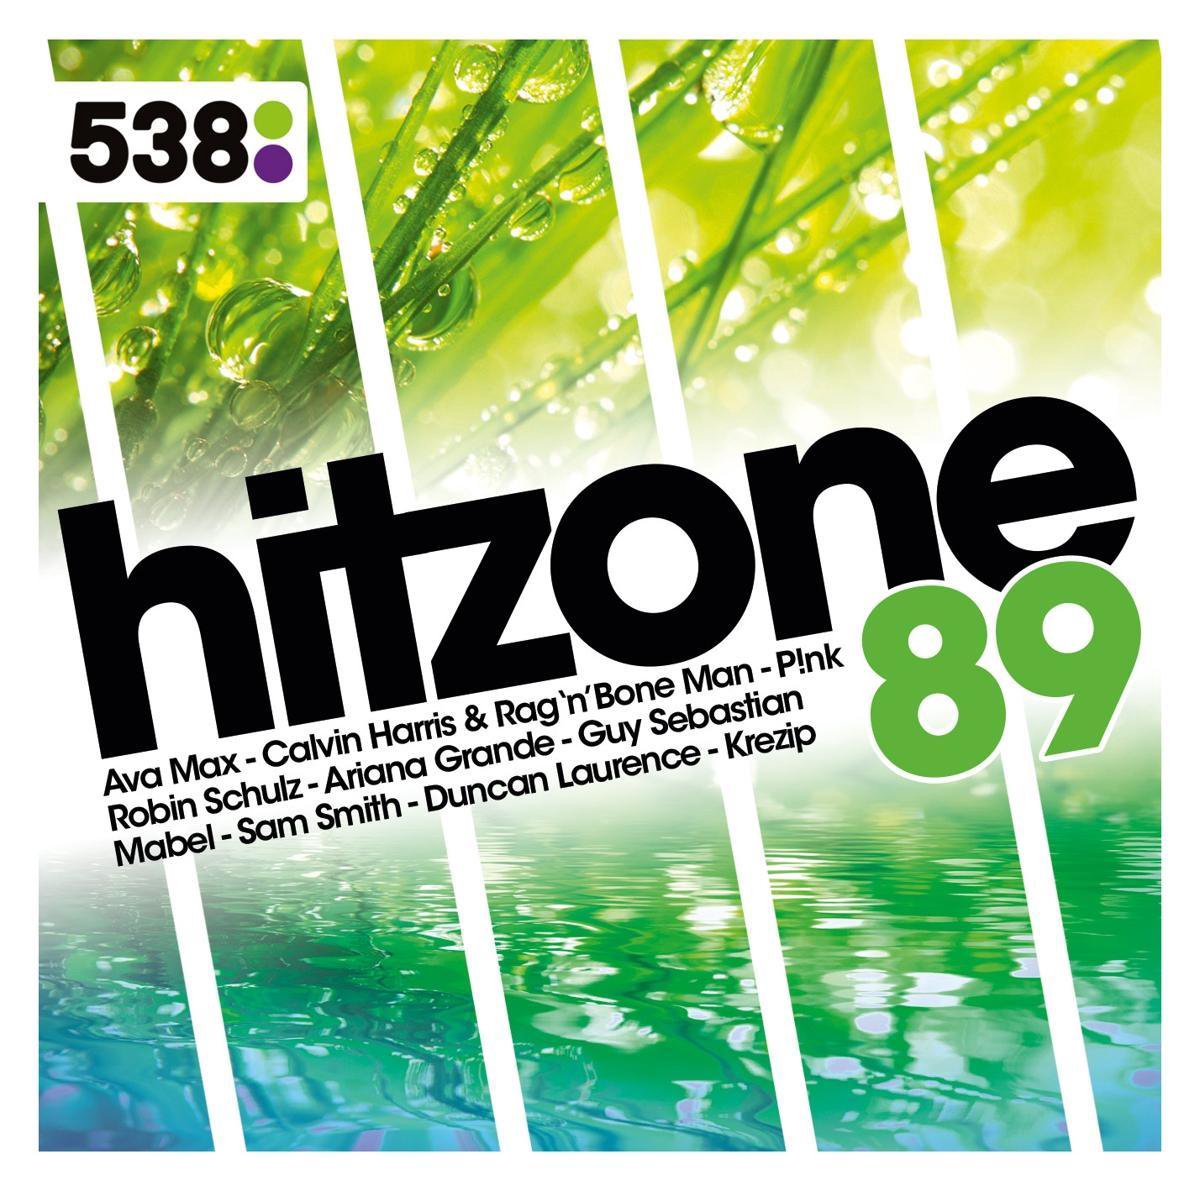 Hitzone 89 - various artists